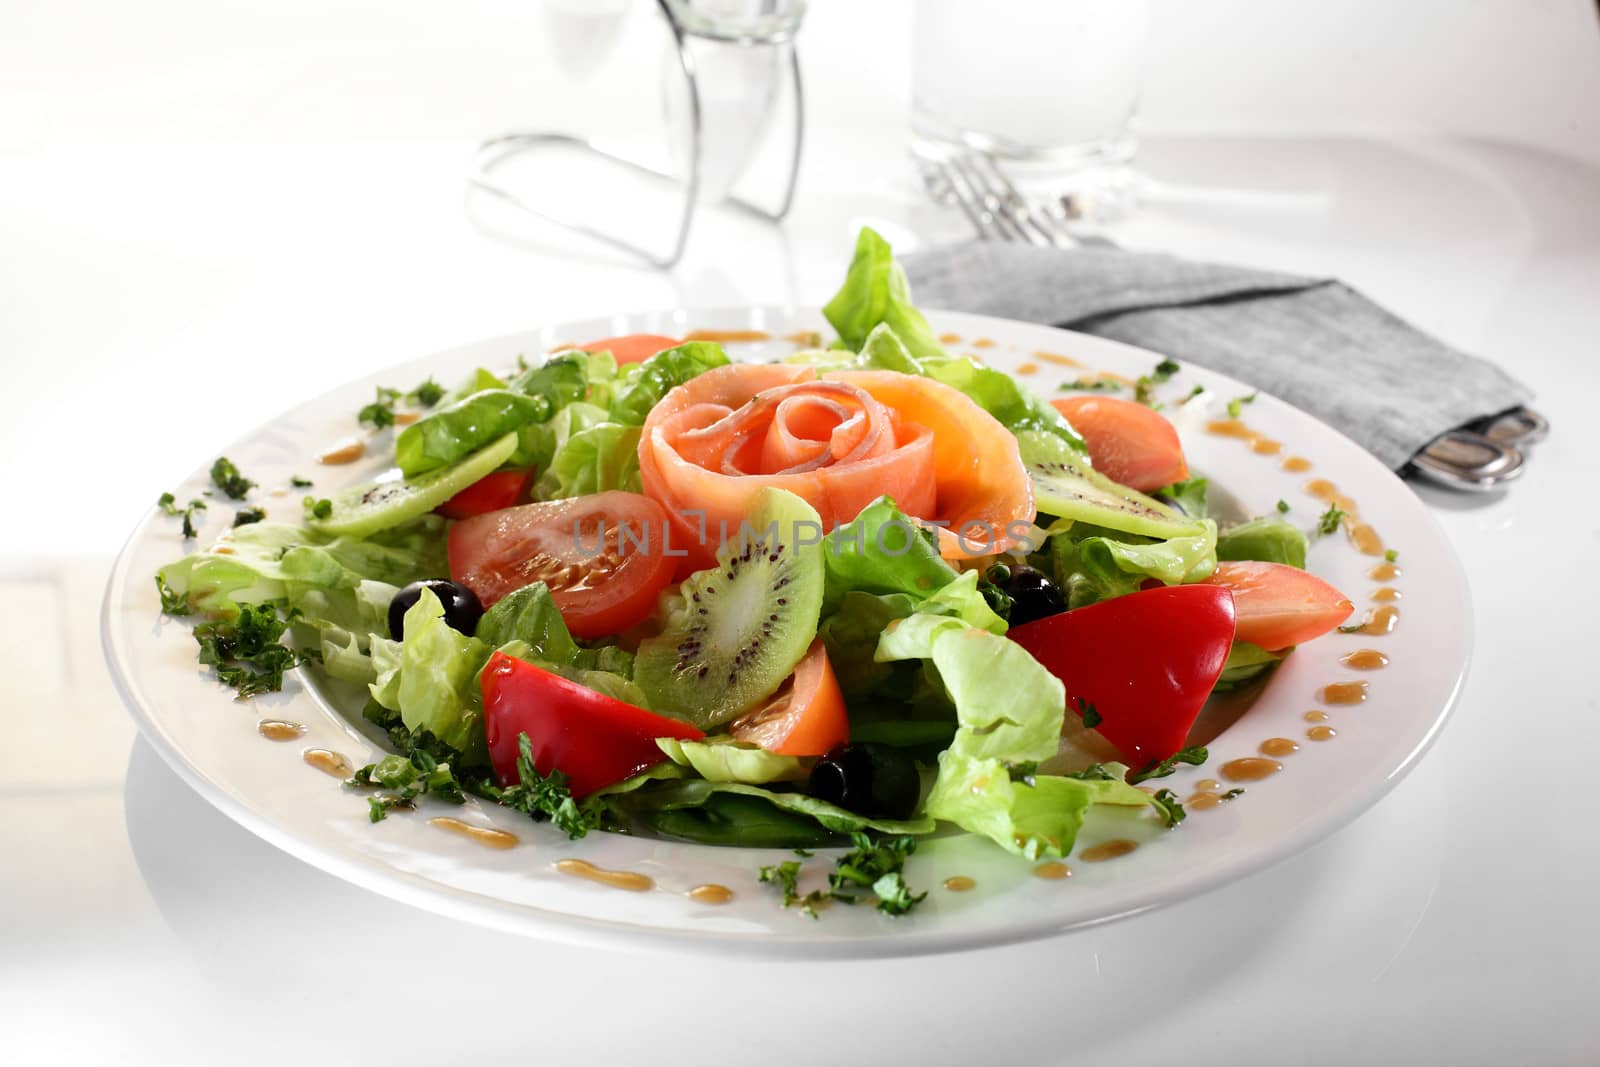 fresh salad with tasty garnish by fiphoto